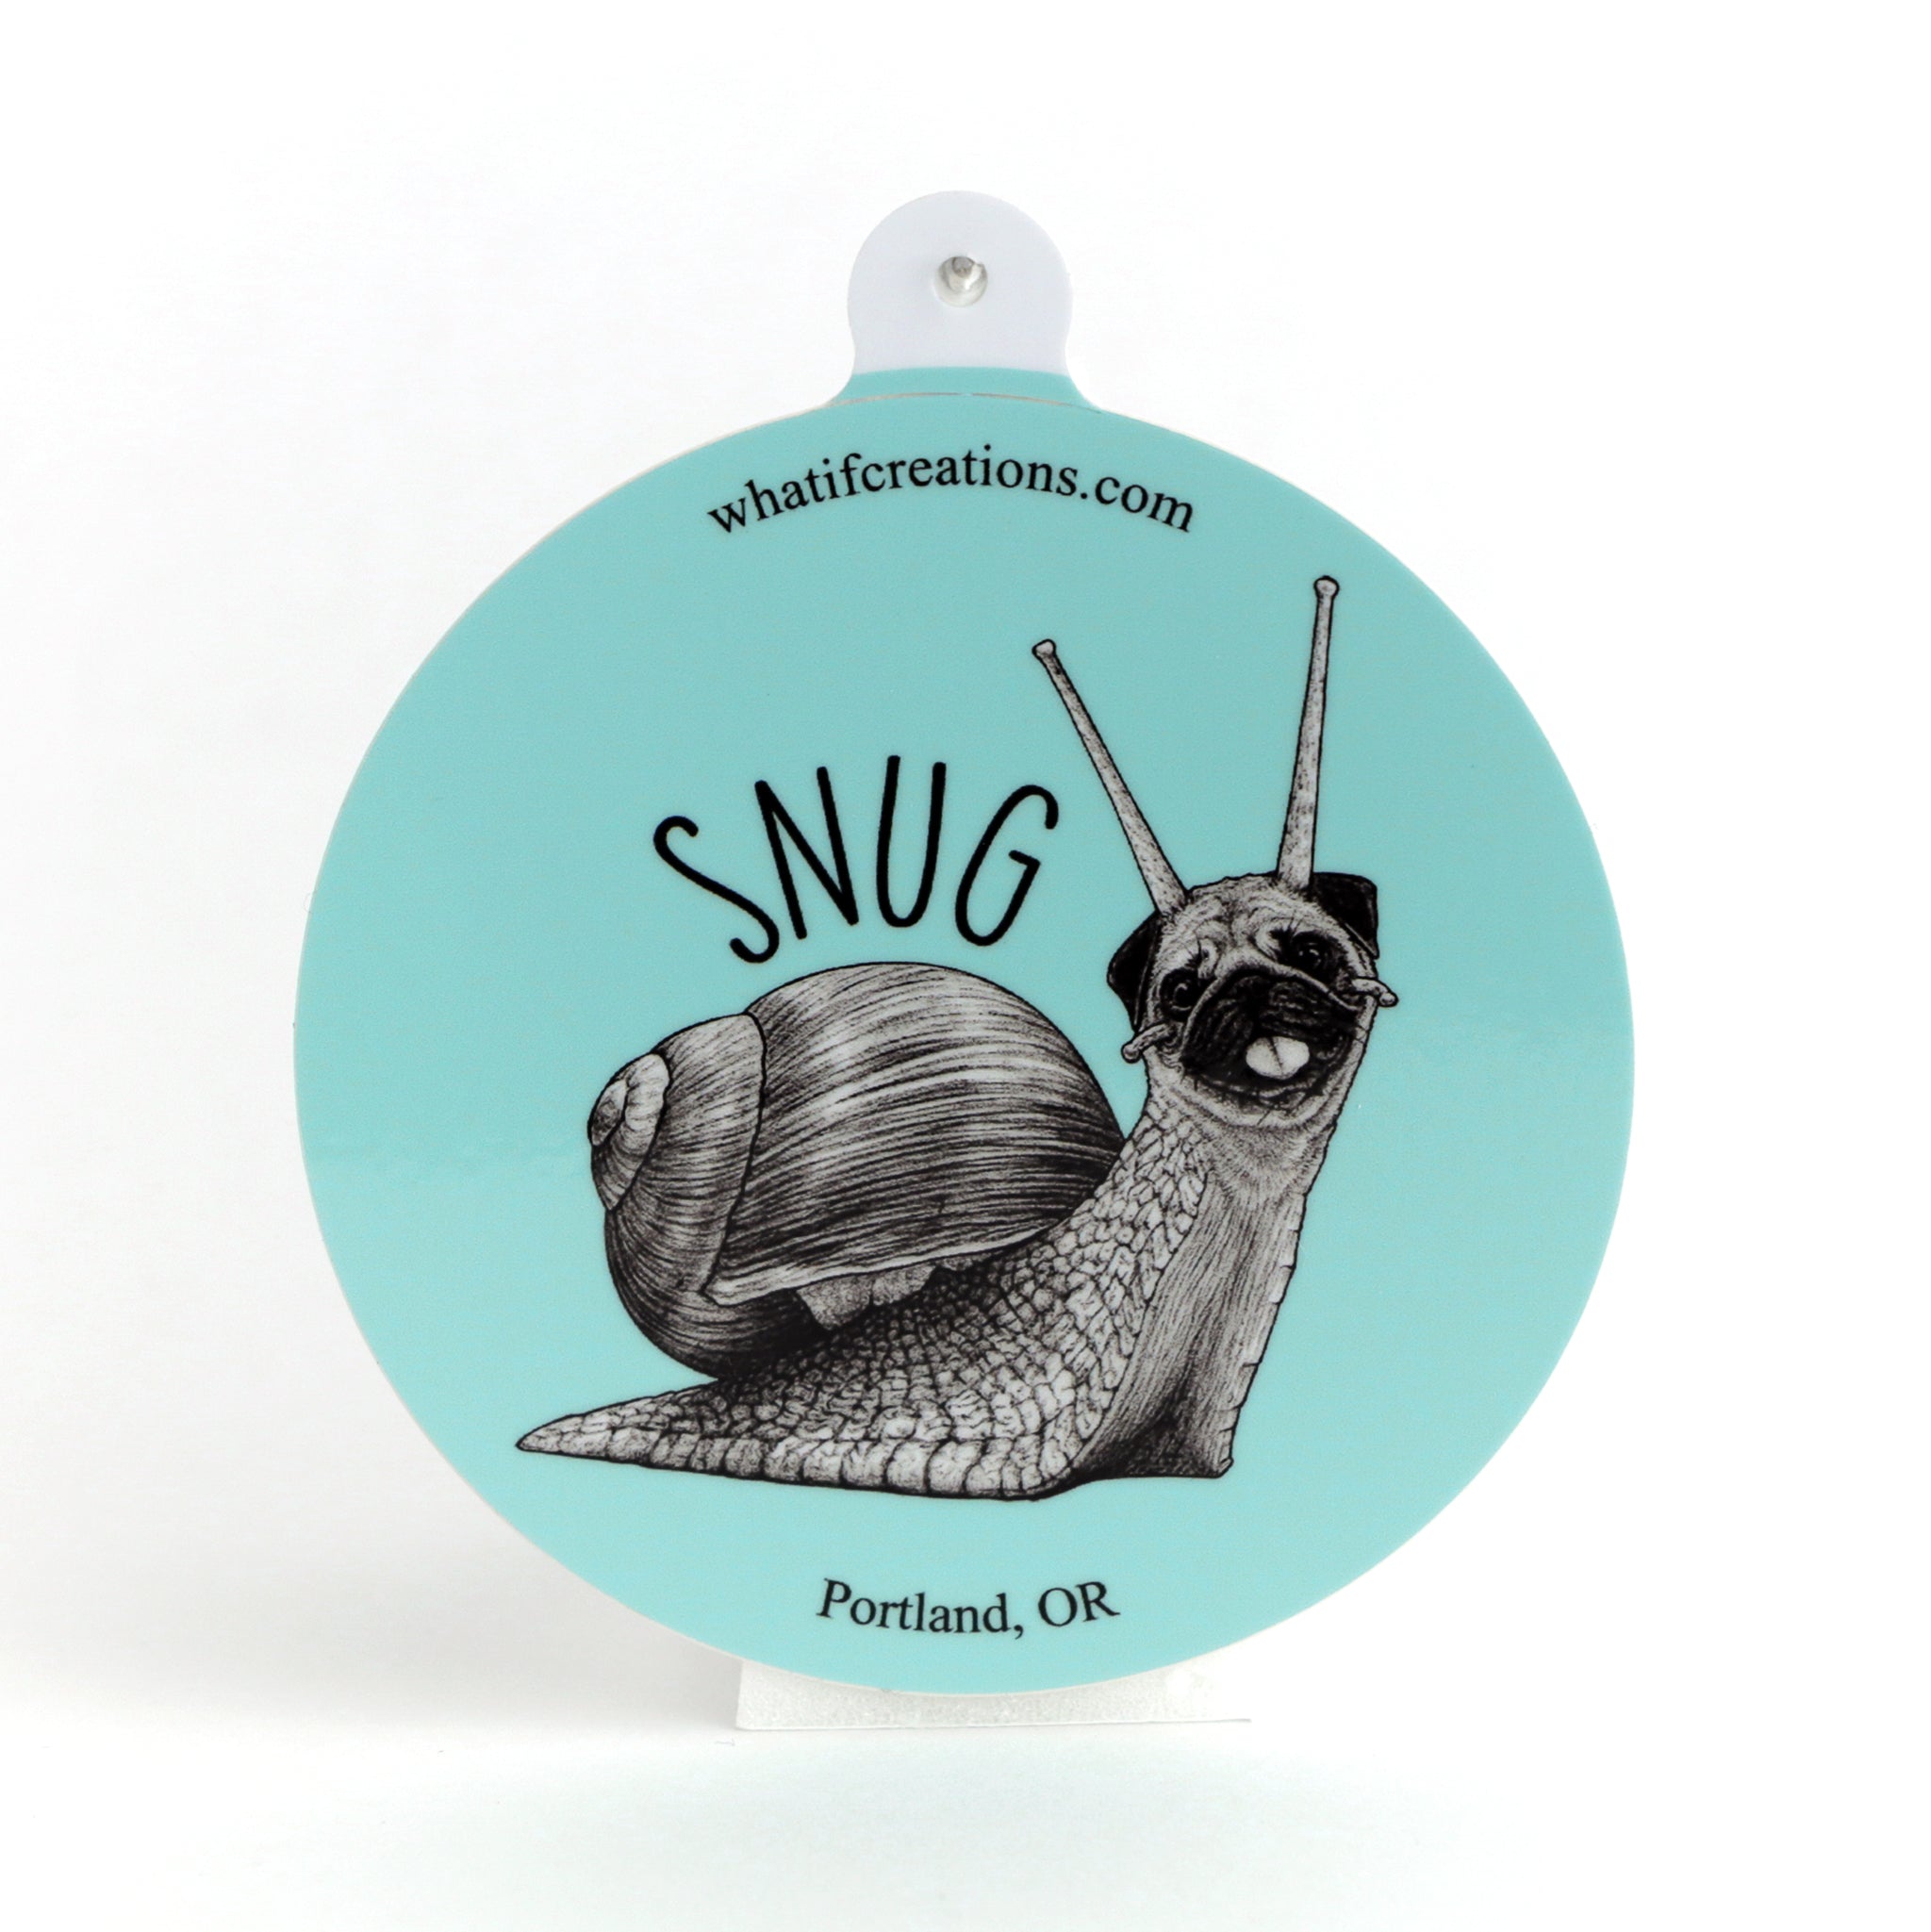 Snug | Snail + Pug Hybrid Animal | 3" Vinyl Sticker